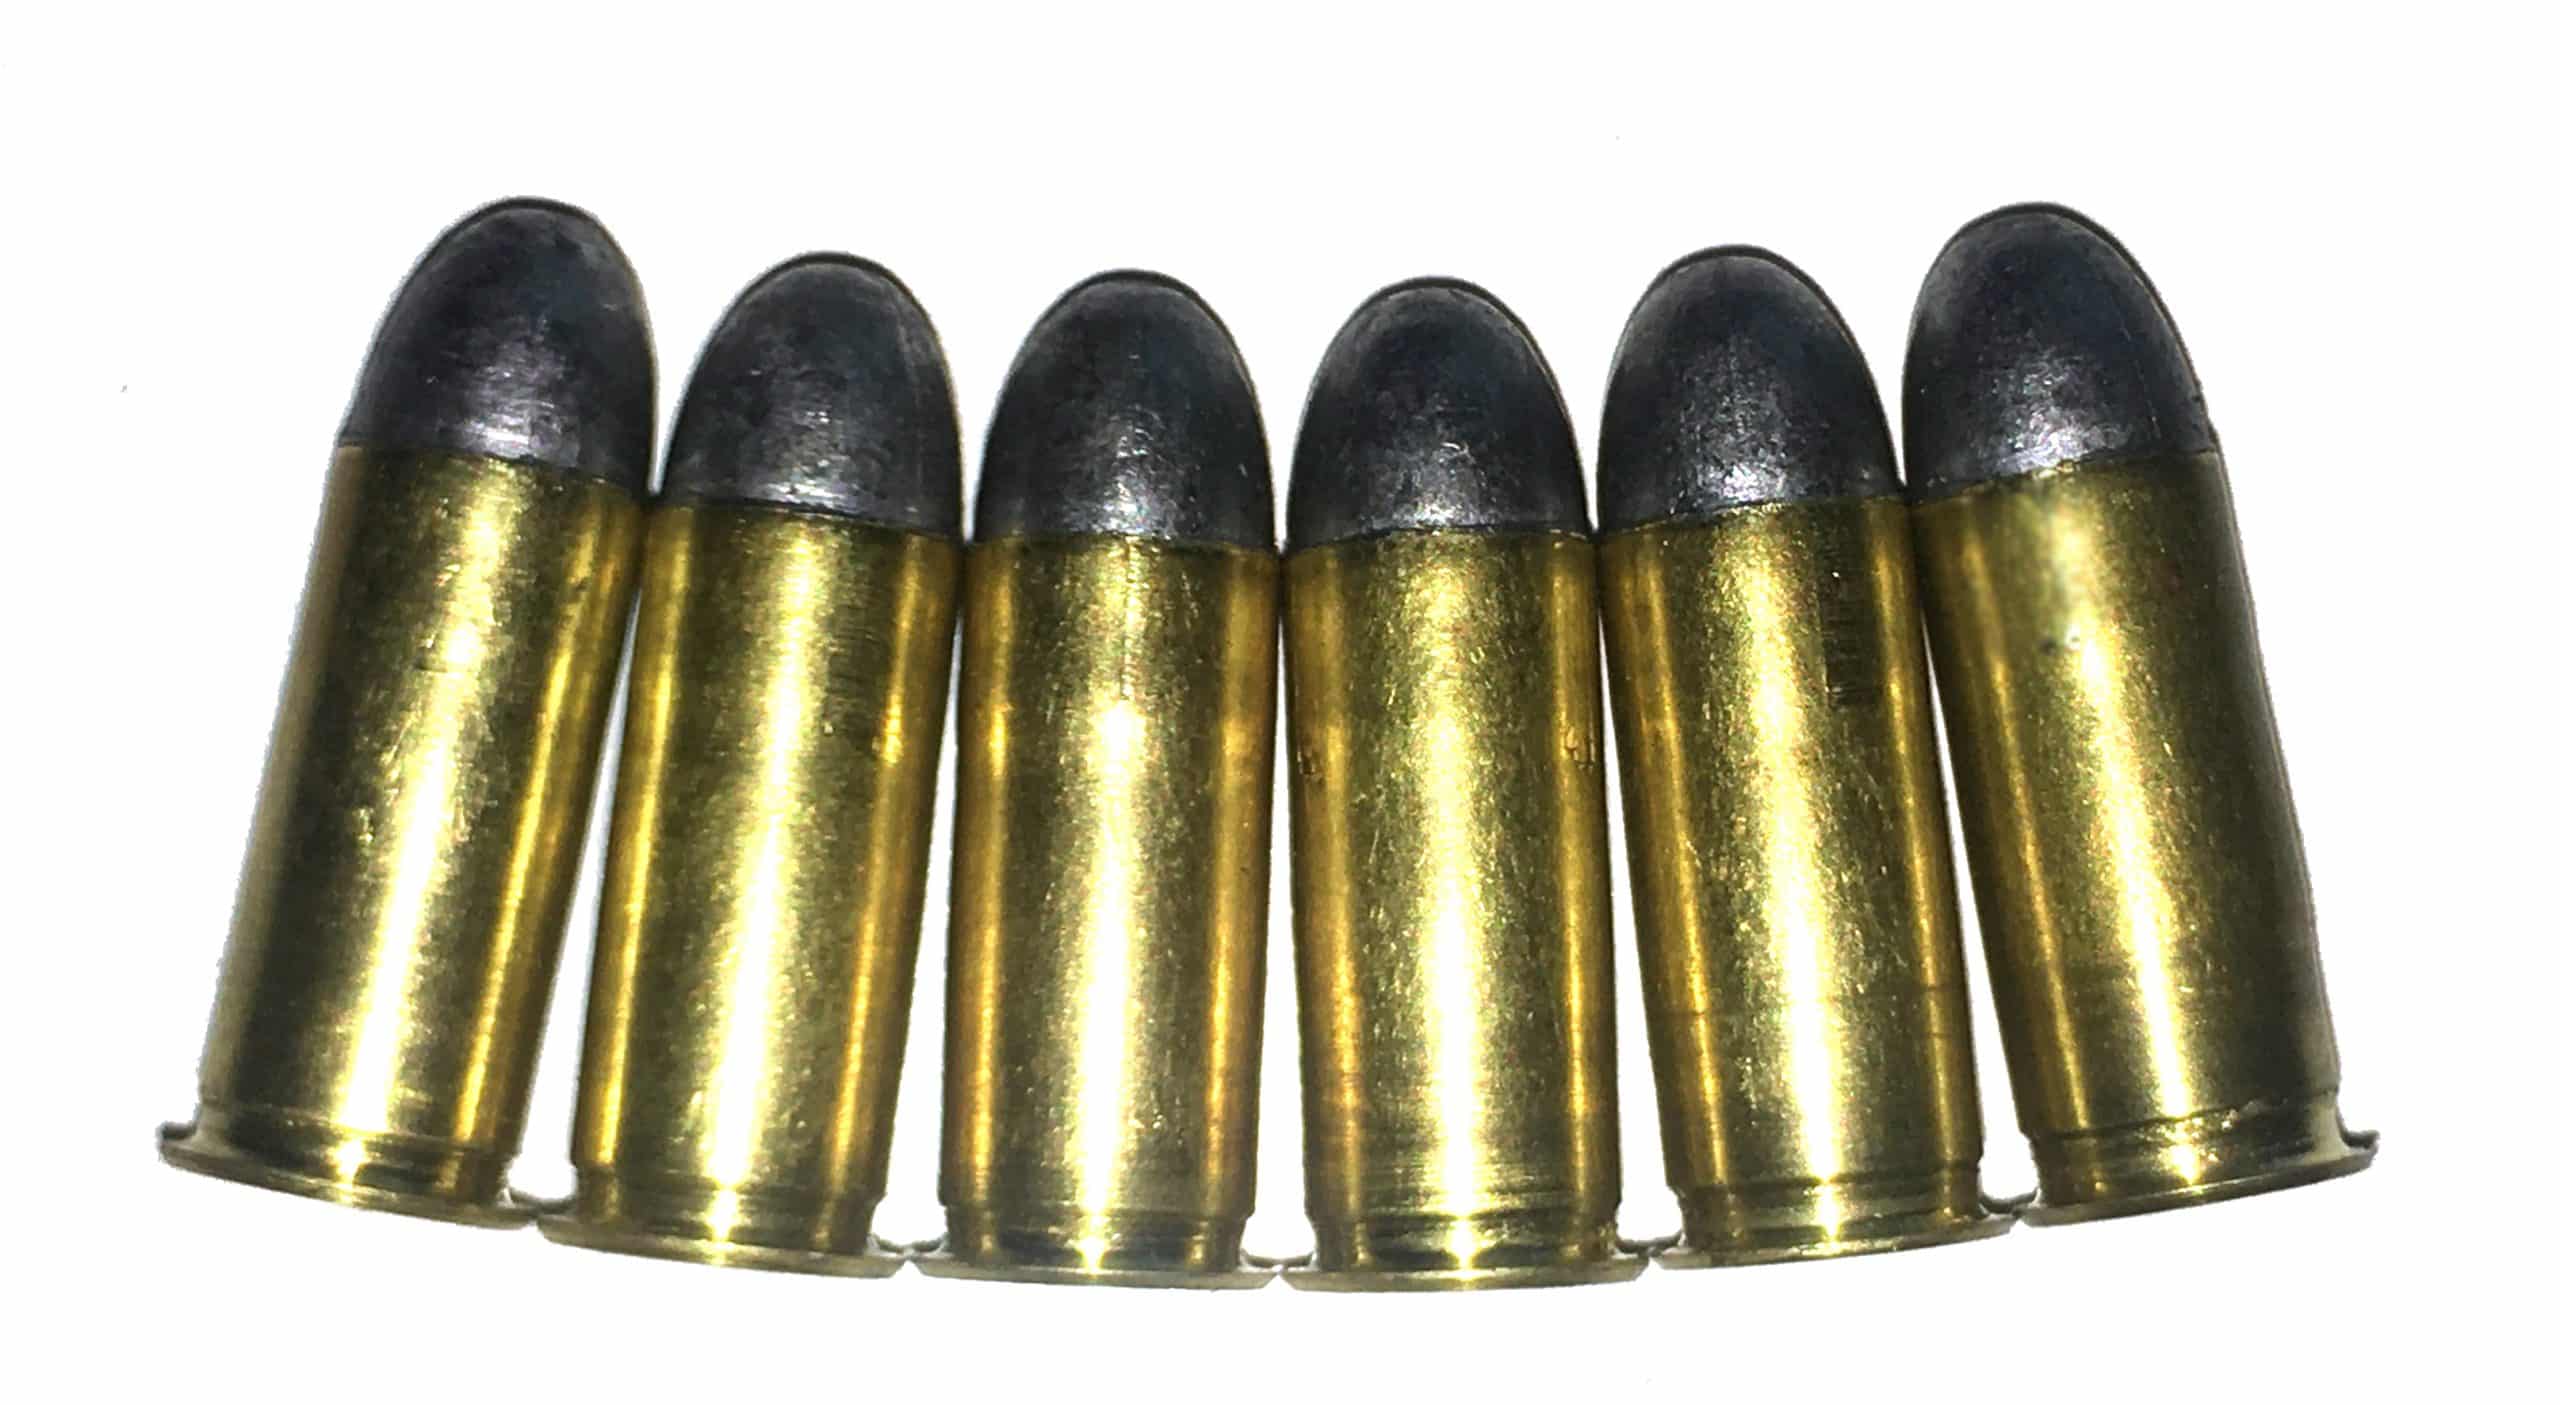 9mm Jap Revolver Dummy Rounds Snap Caps Fake Bullets J&M Spec INERT